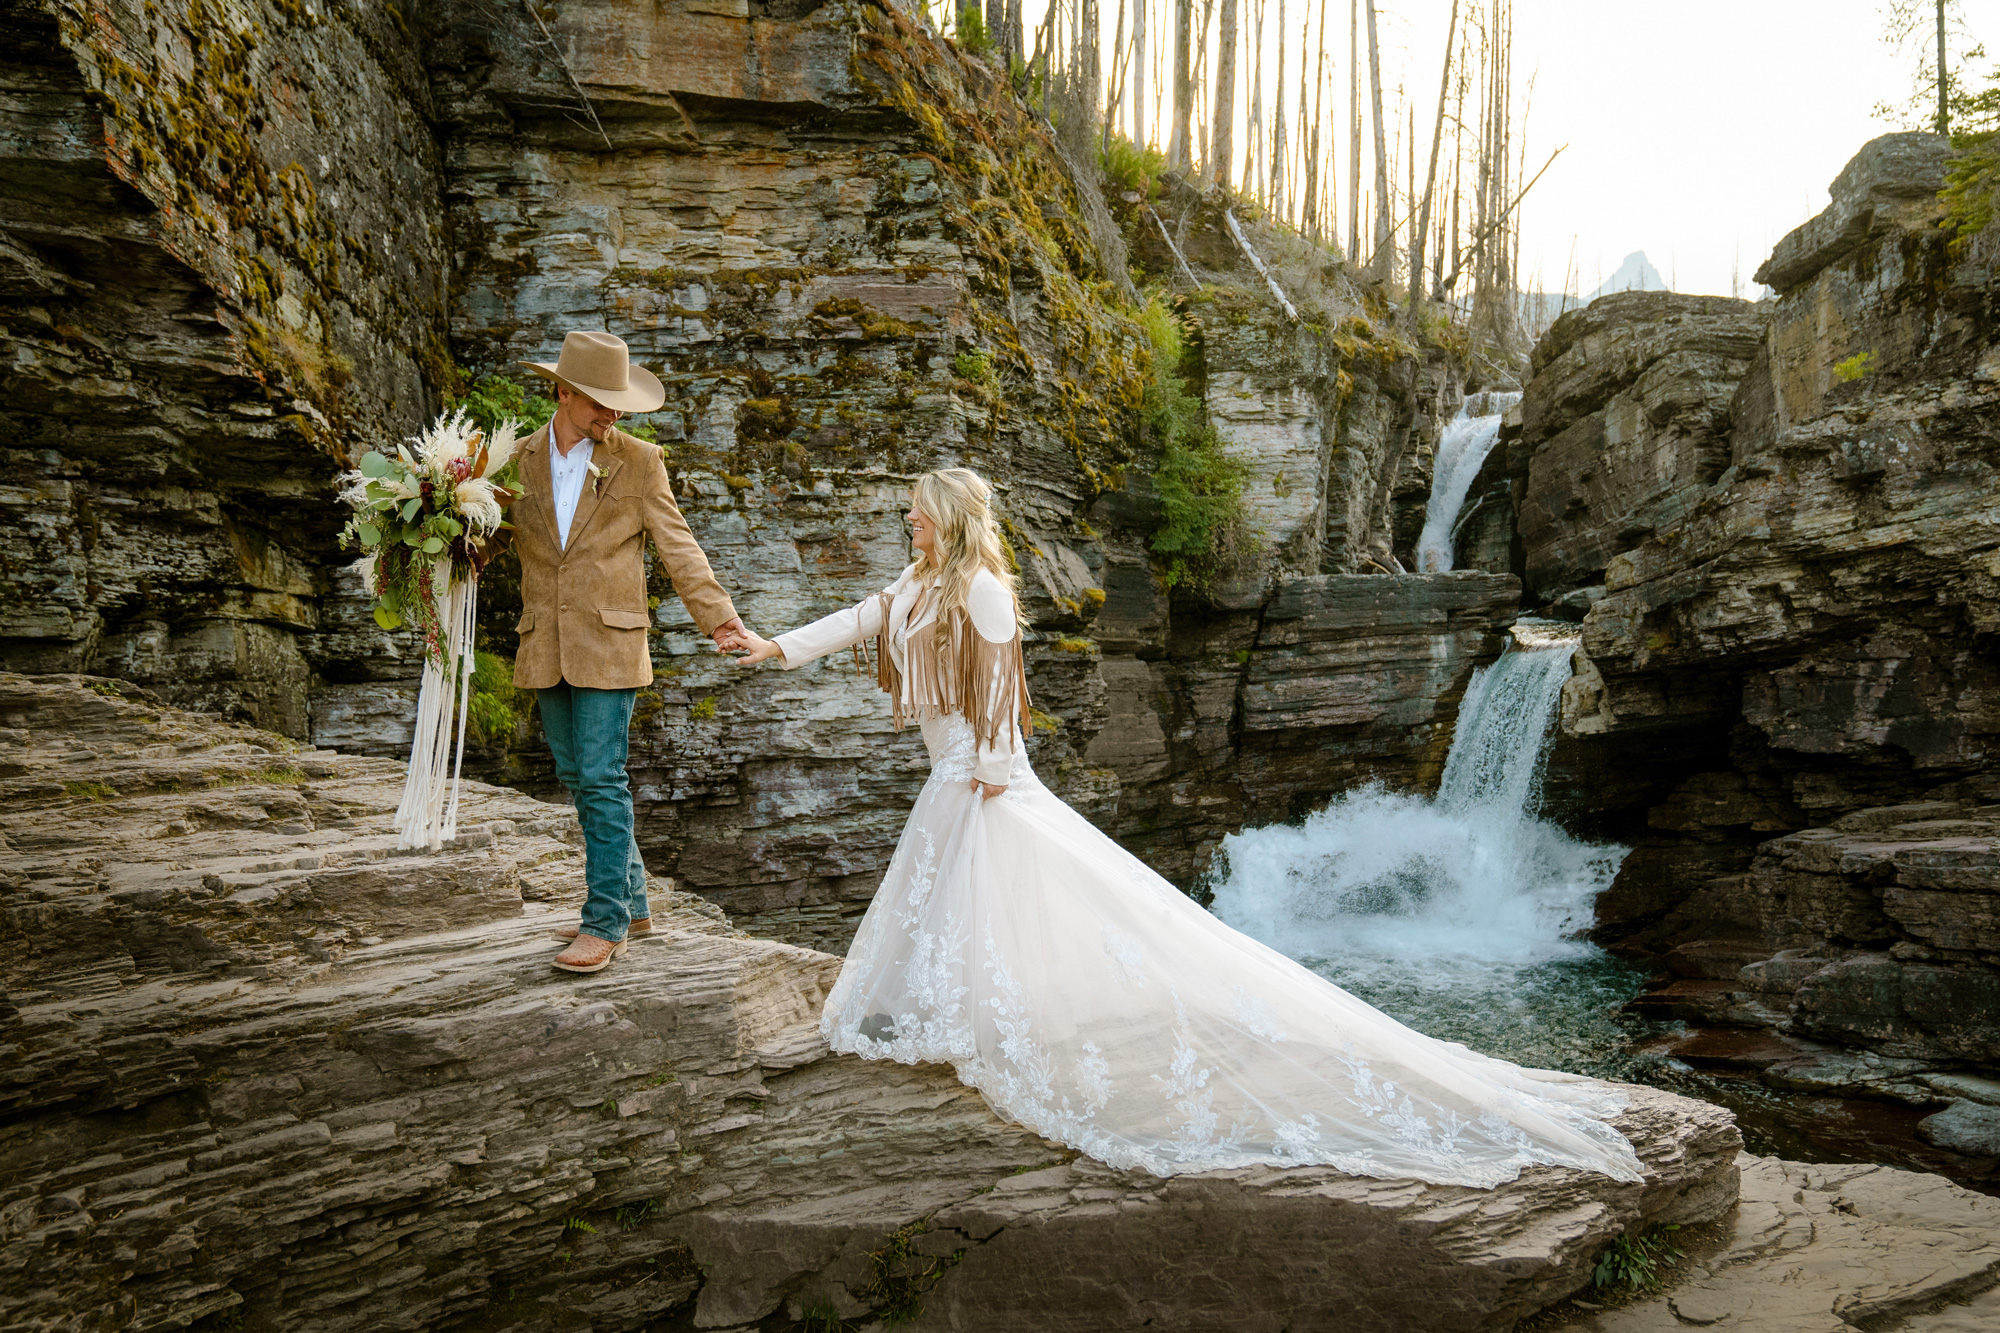 Western-style Ranch Destination Wedding in Montana